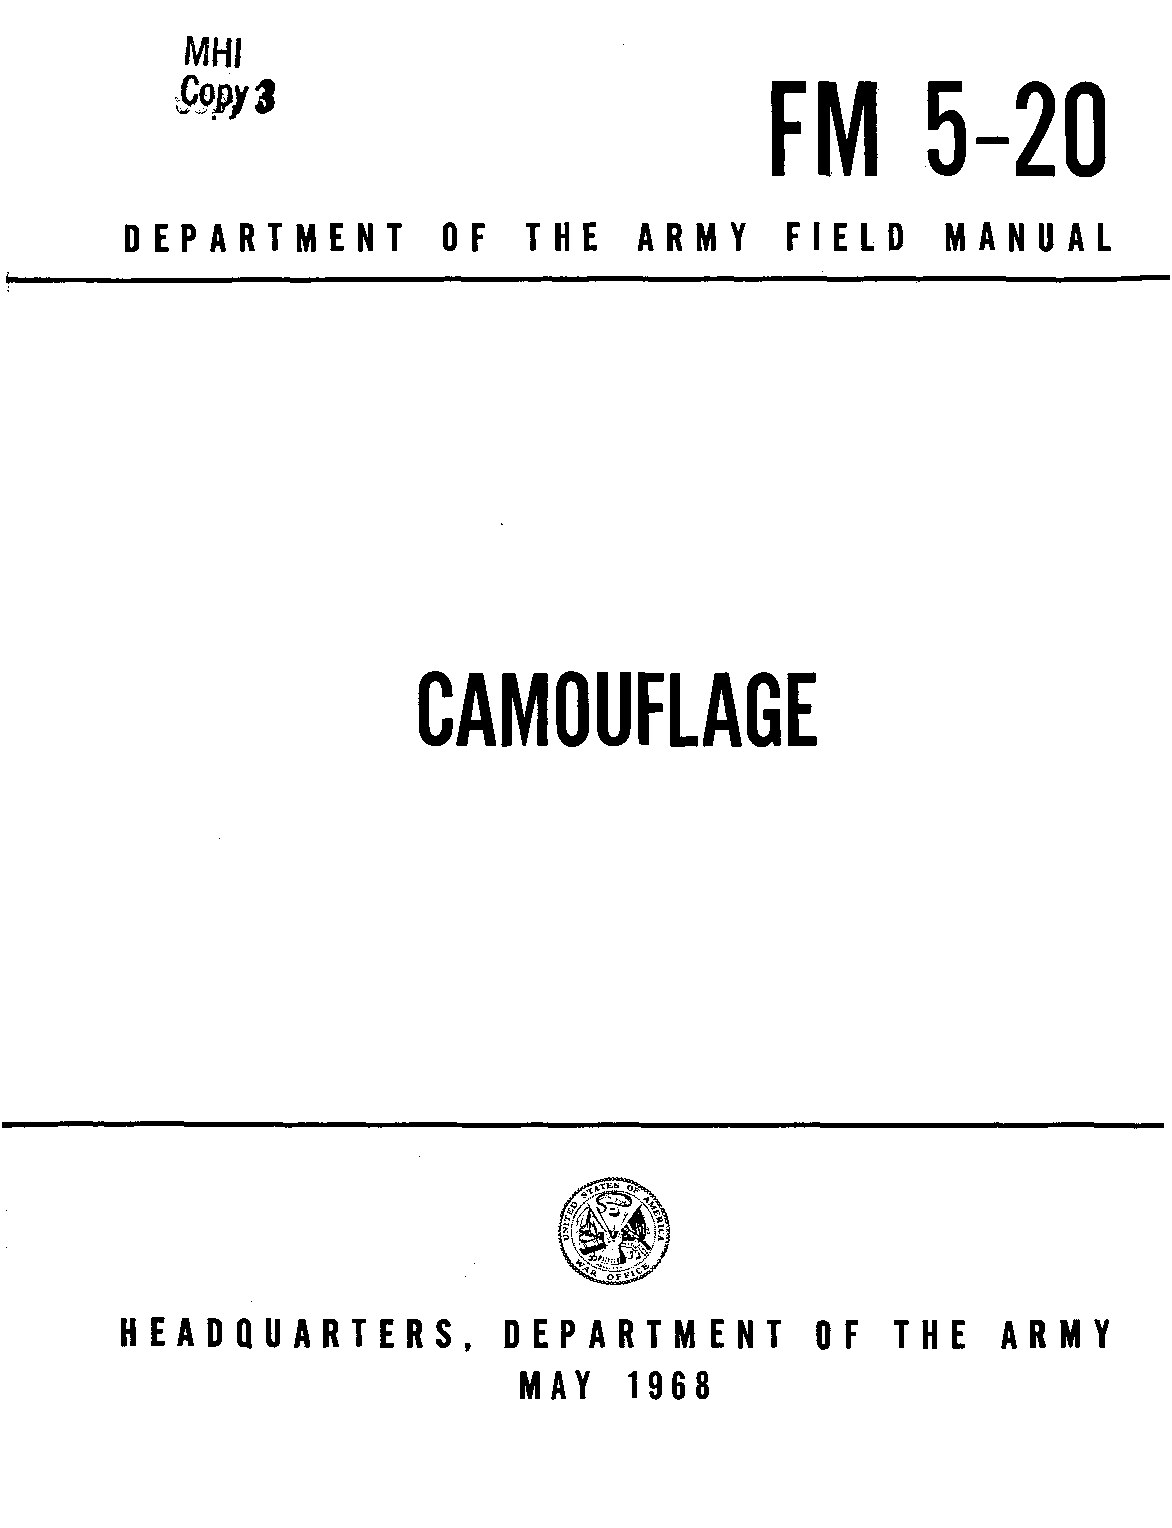 FM 5-20: Camouflage